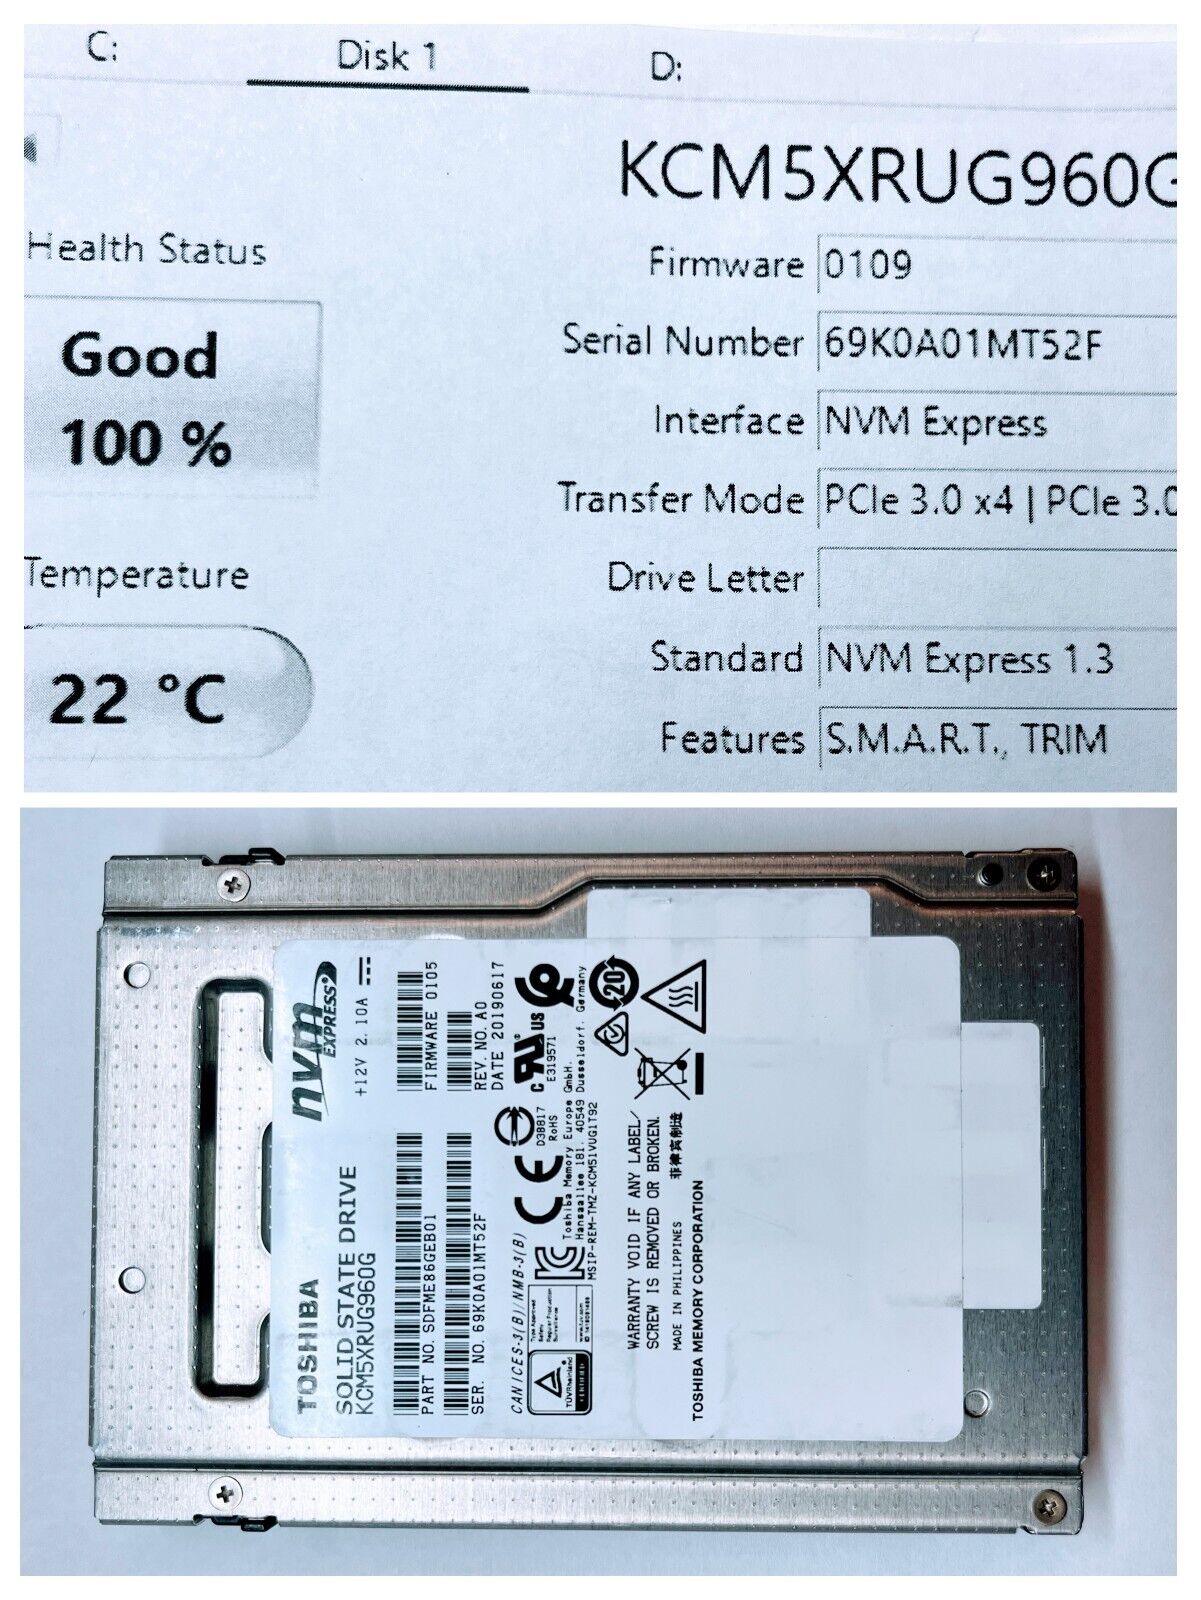 Kioxia 960GB U.2  NVMe SSD Toshiba KCM5XRUG960G,  Excellent 100% Good Health